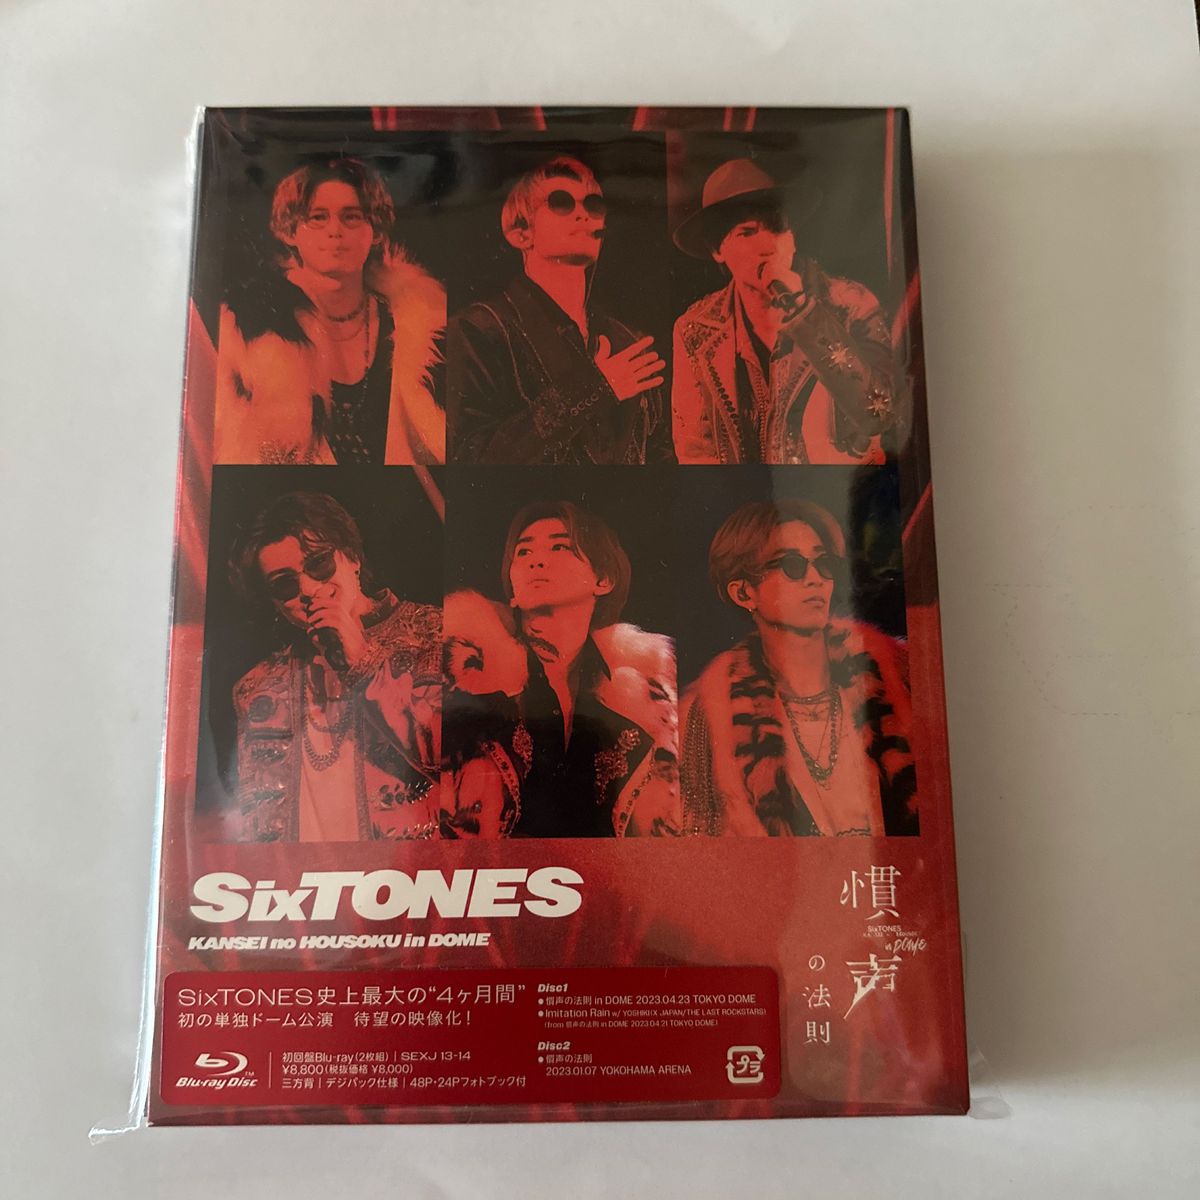 SixTONES慣声の法則 in DOME (初回盤) (Blu-ray)